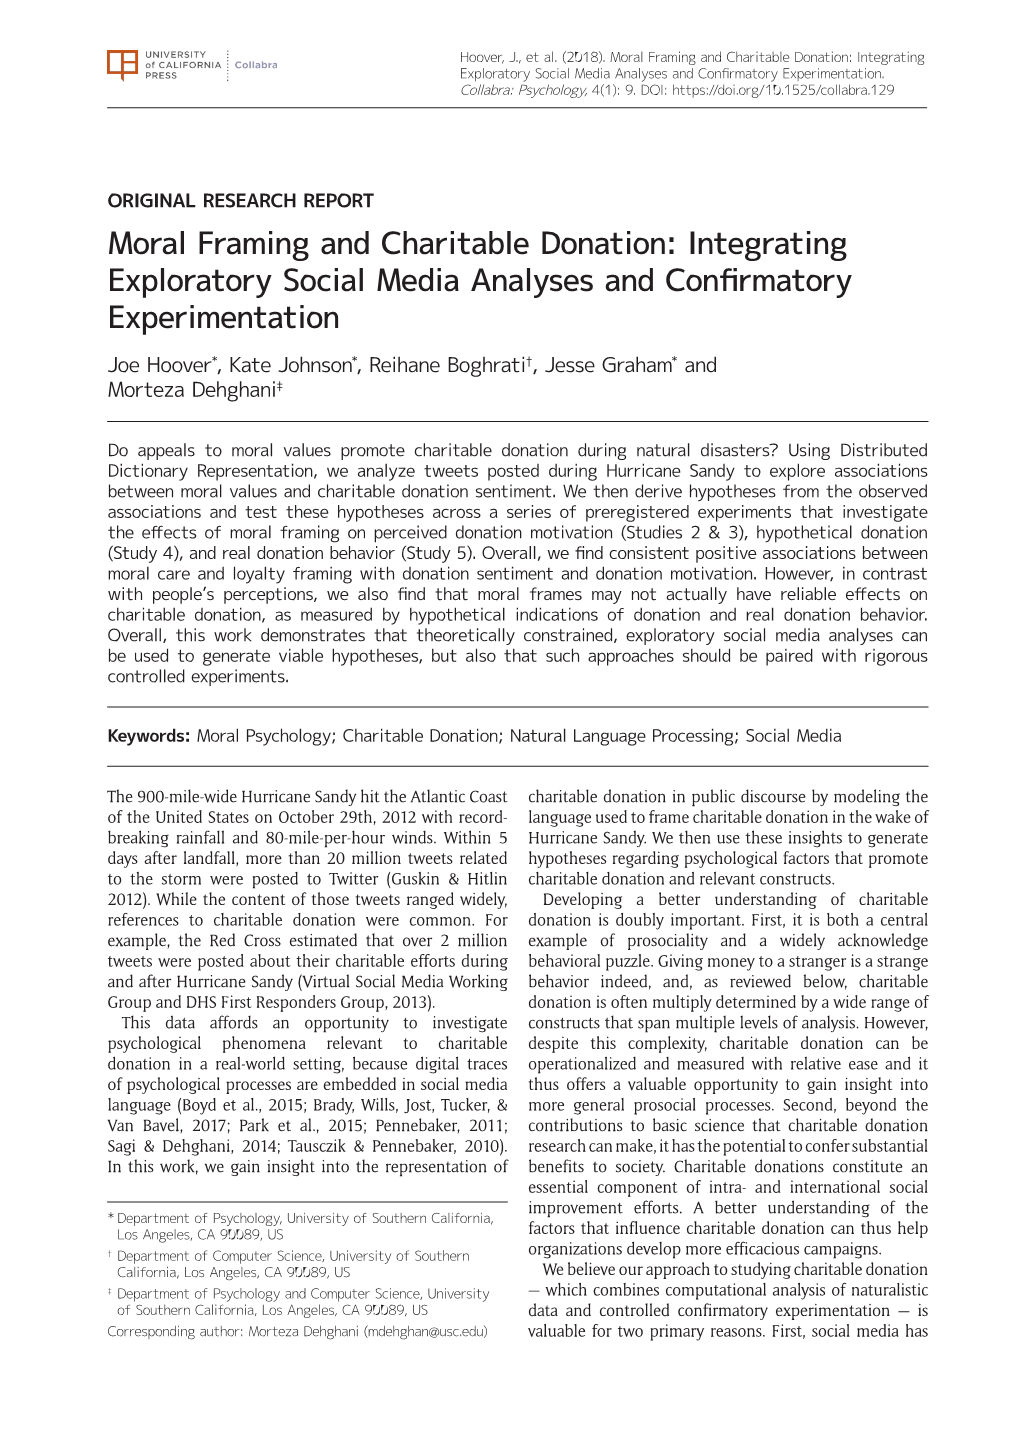 Moral Framing and Charitable Donation: Integrating Exploratory Social Media Analyses and Confirmatory Experimentation